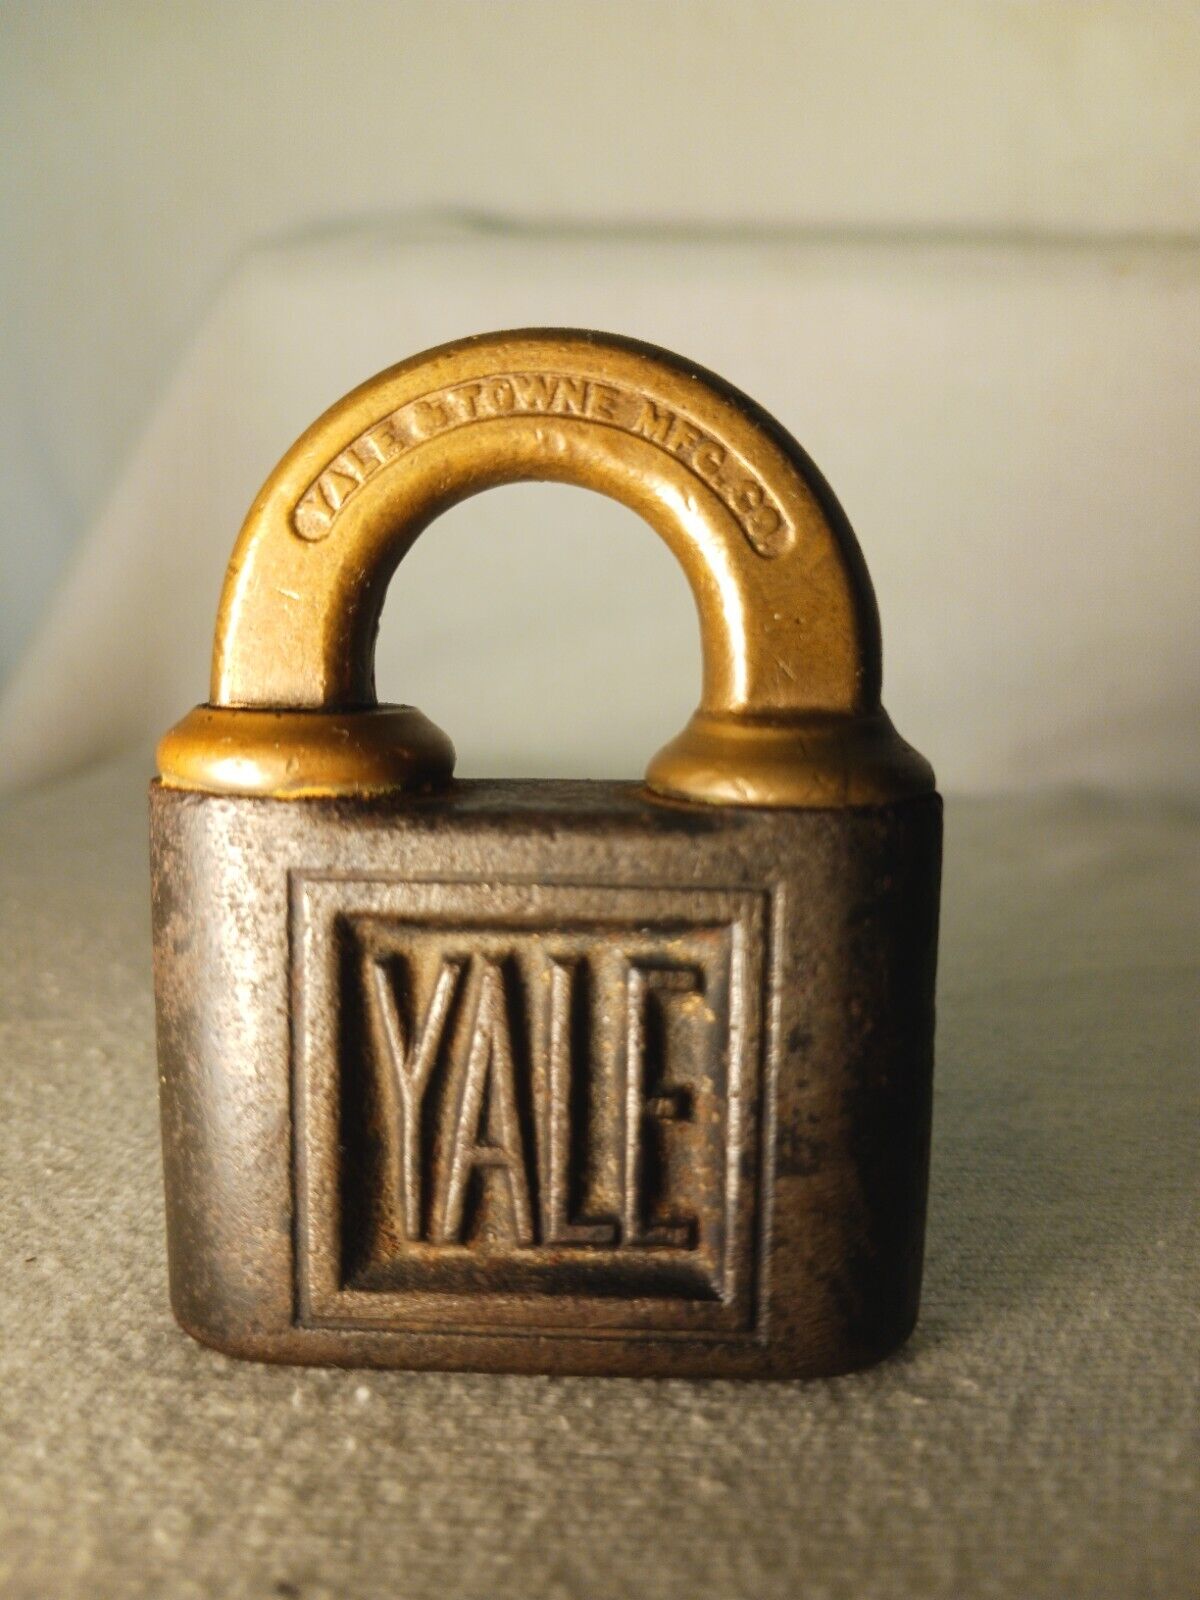 Antique Yale Padlock No Key For Lock Vintage 